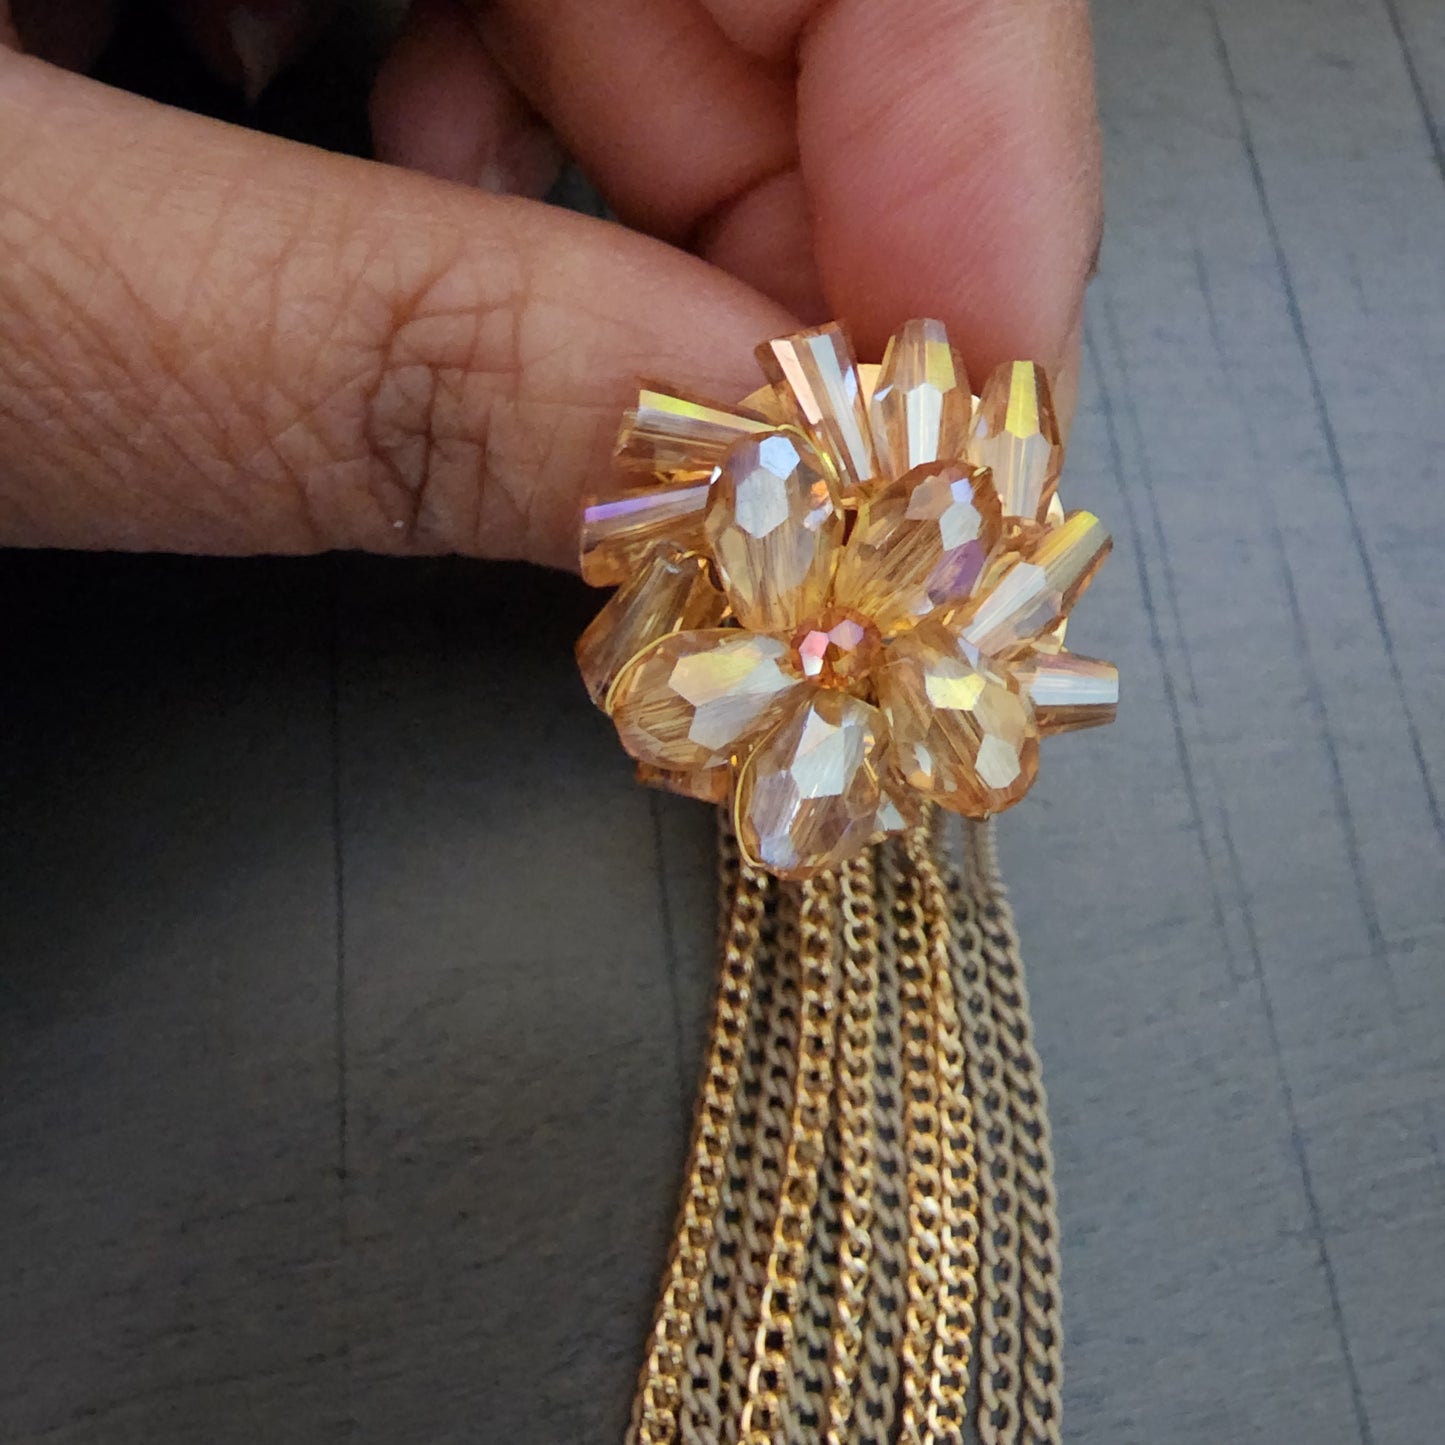 Handmade Crystal Beads Statement Earrings